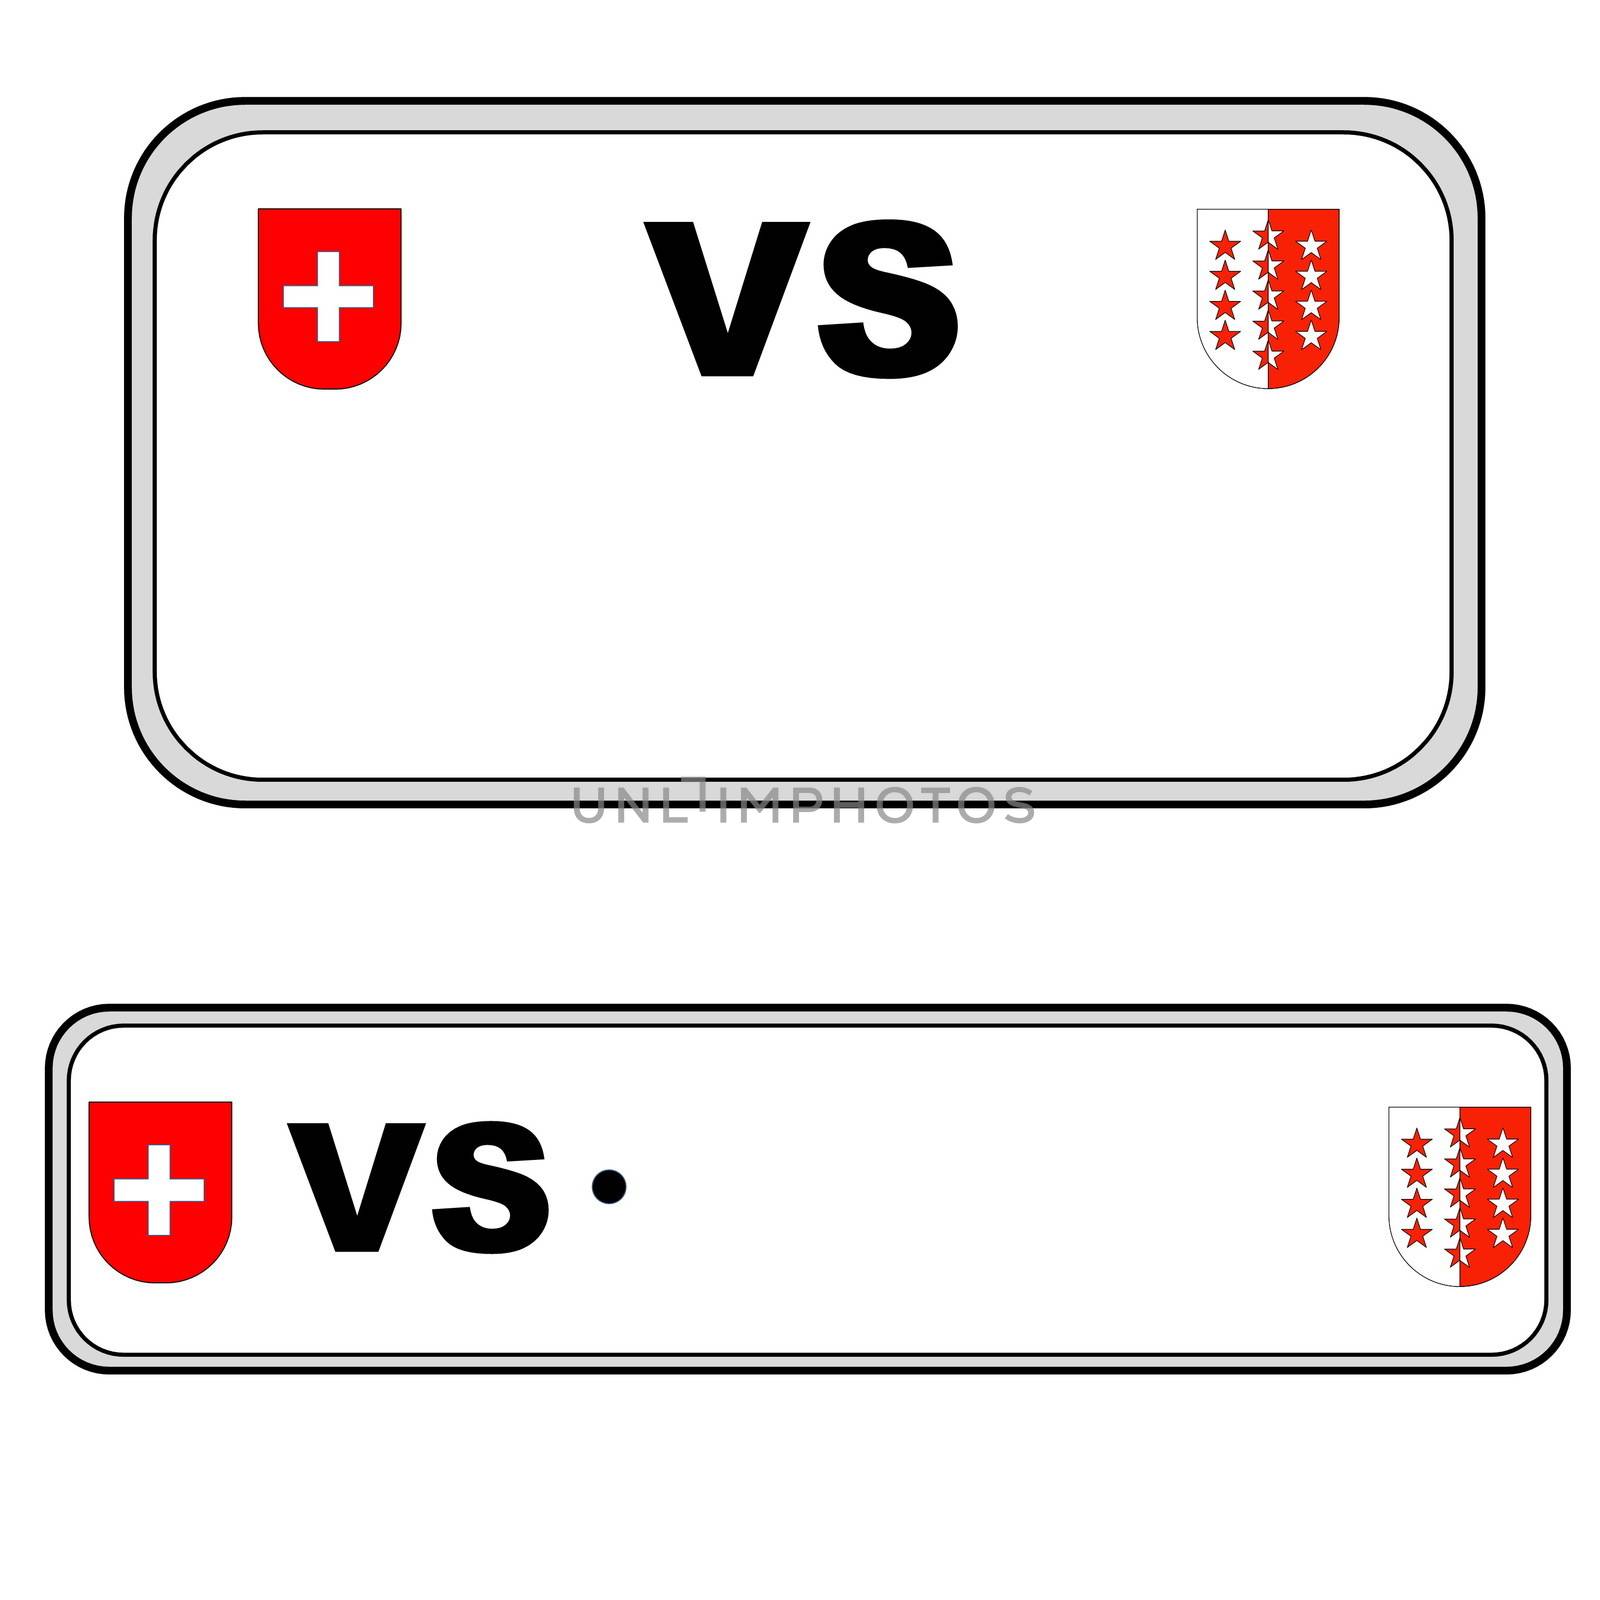 Valais plate number, Switzerland by Elenaphotos21